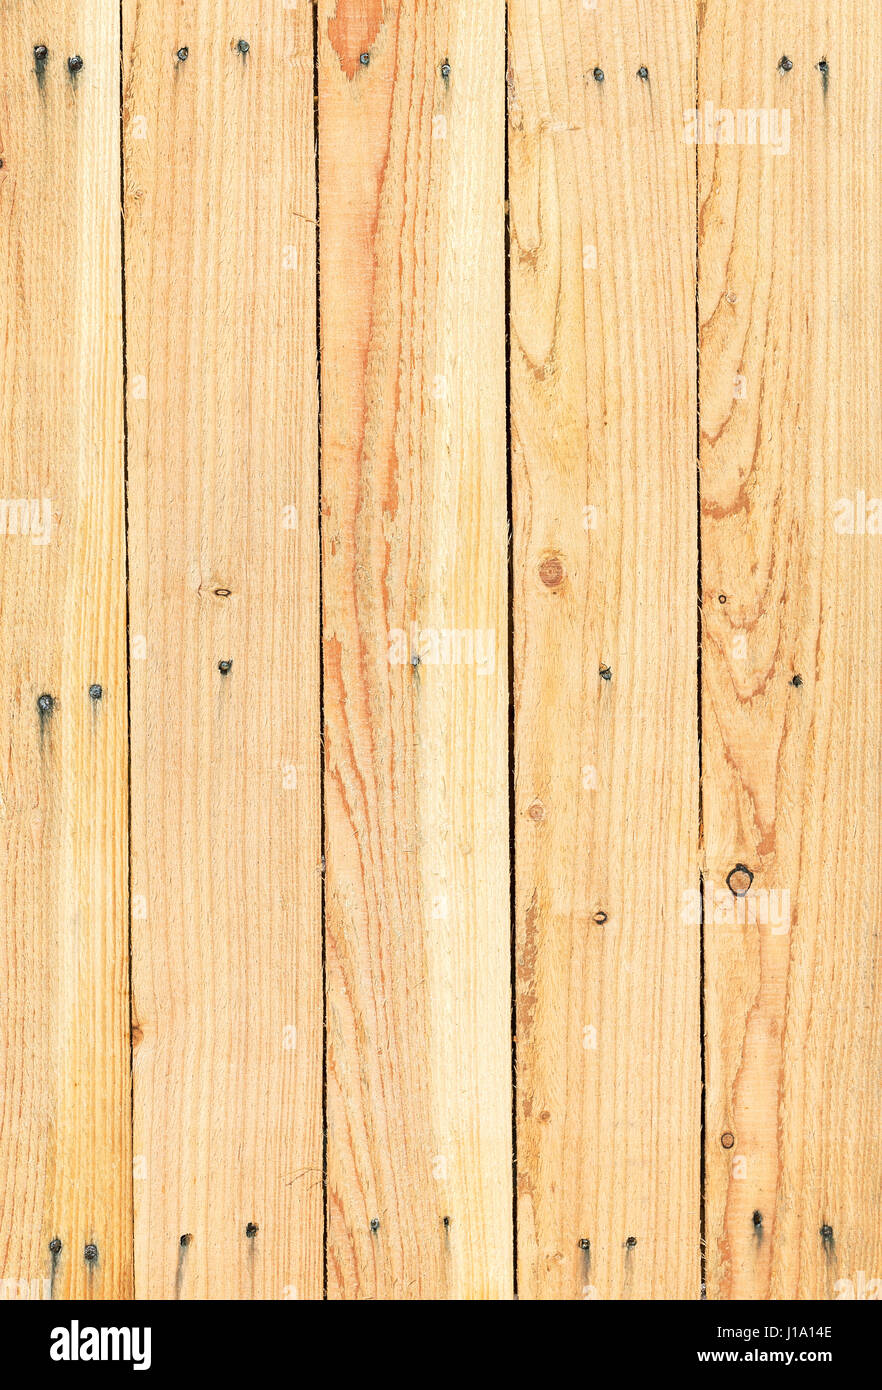 Wood background. Pine wood texture series. Stock Photo